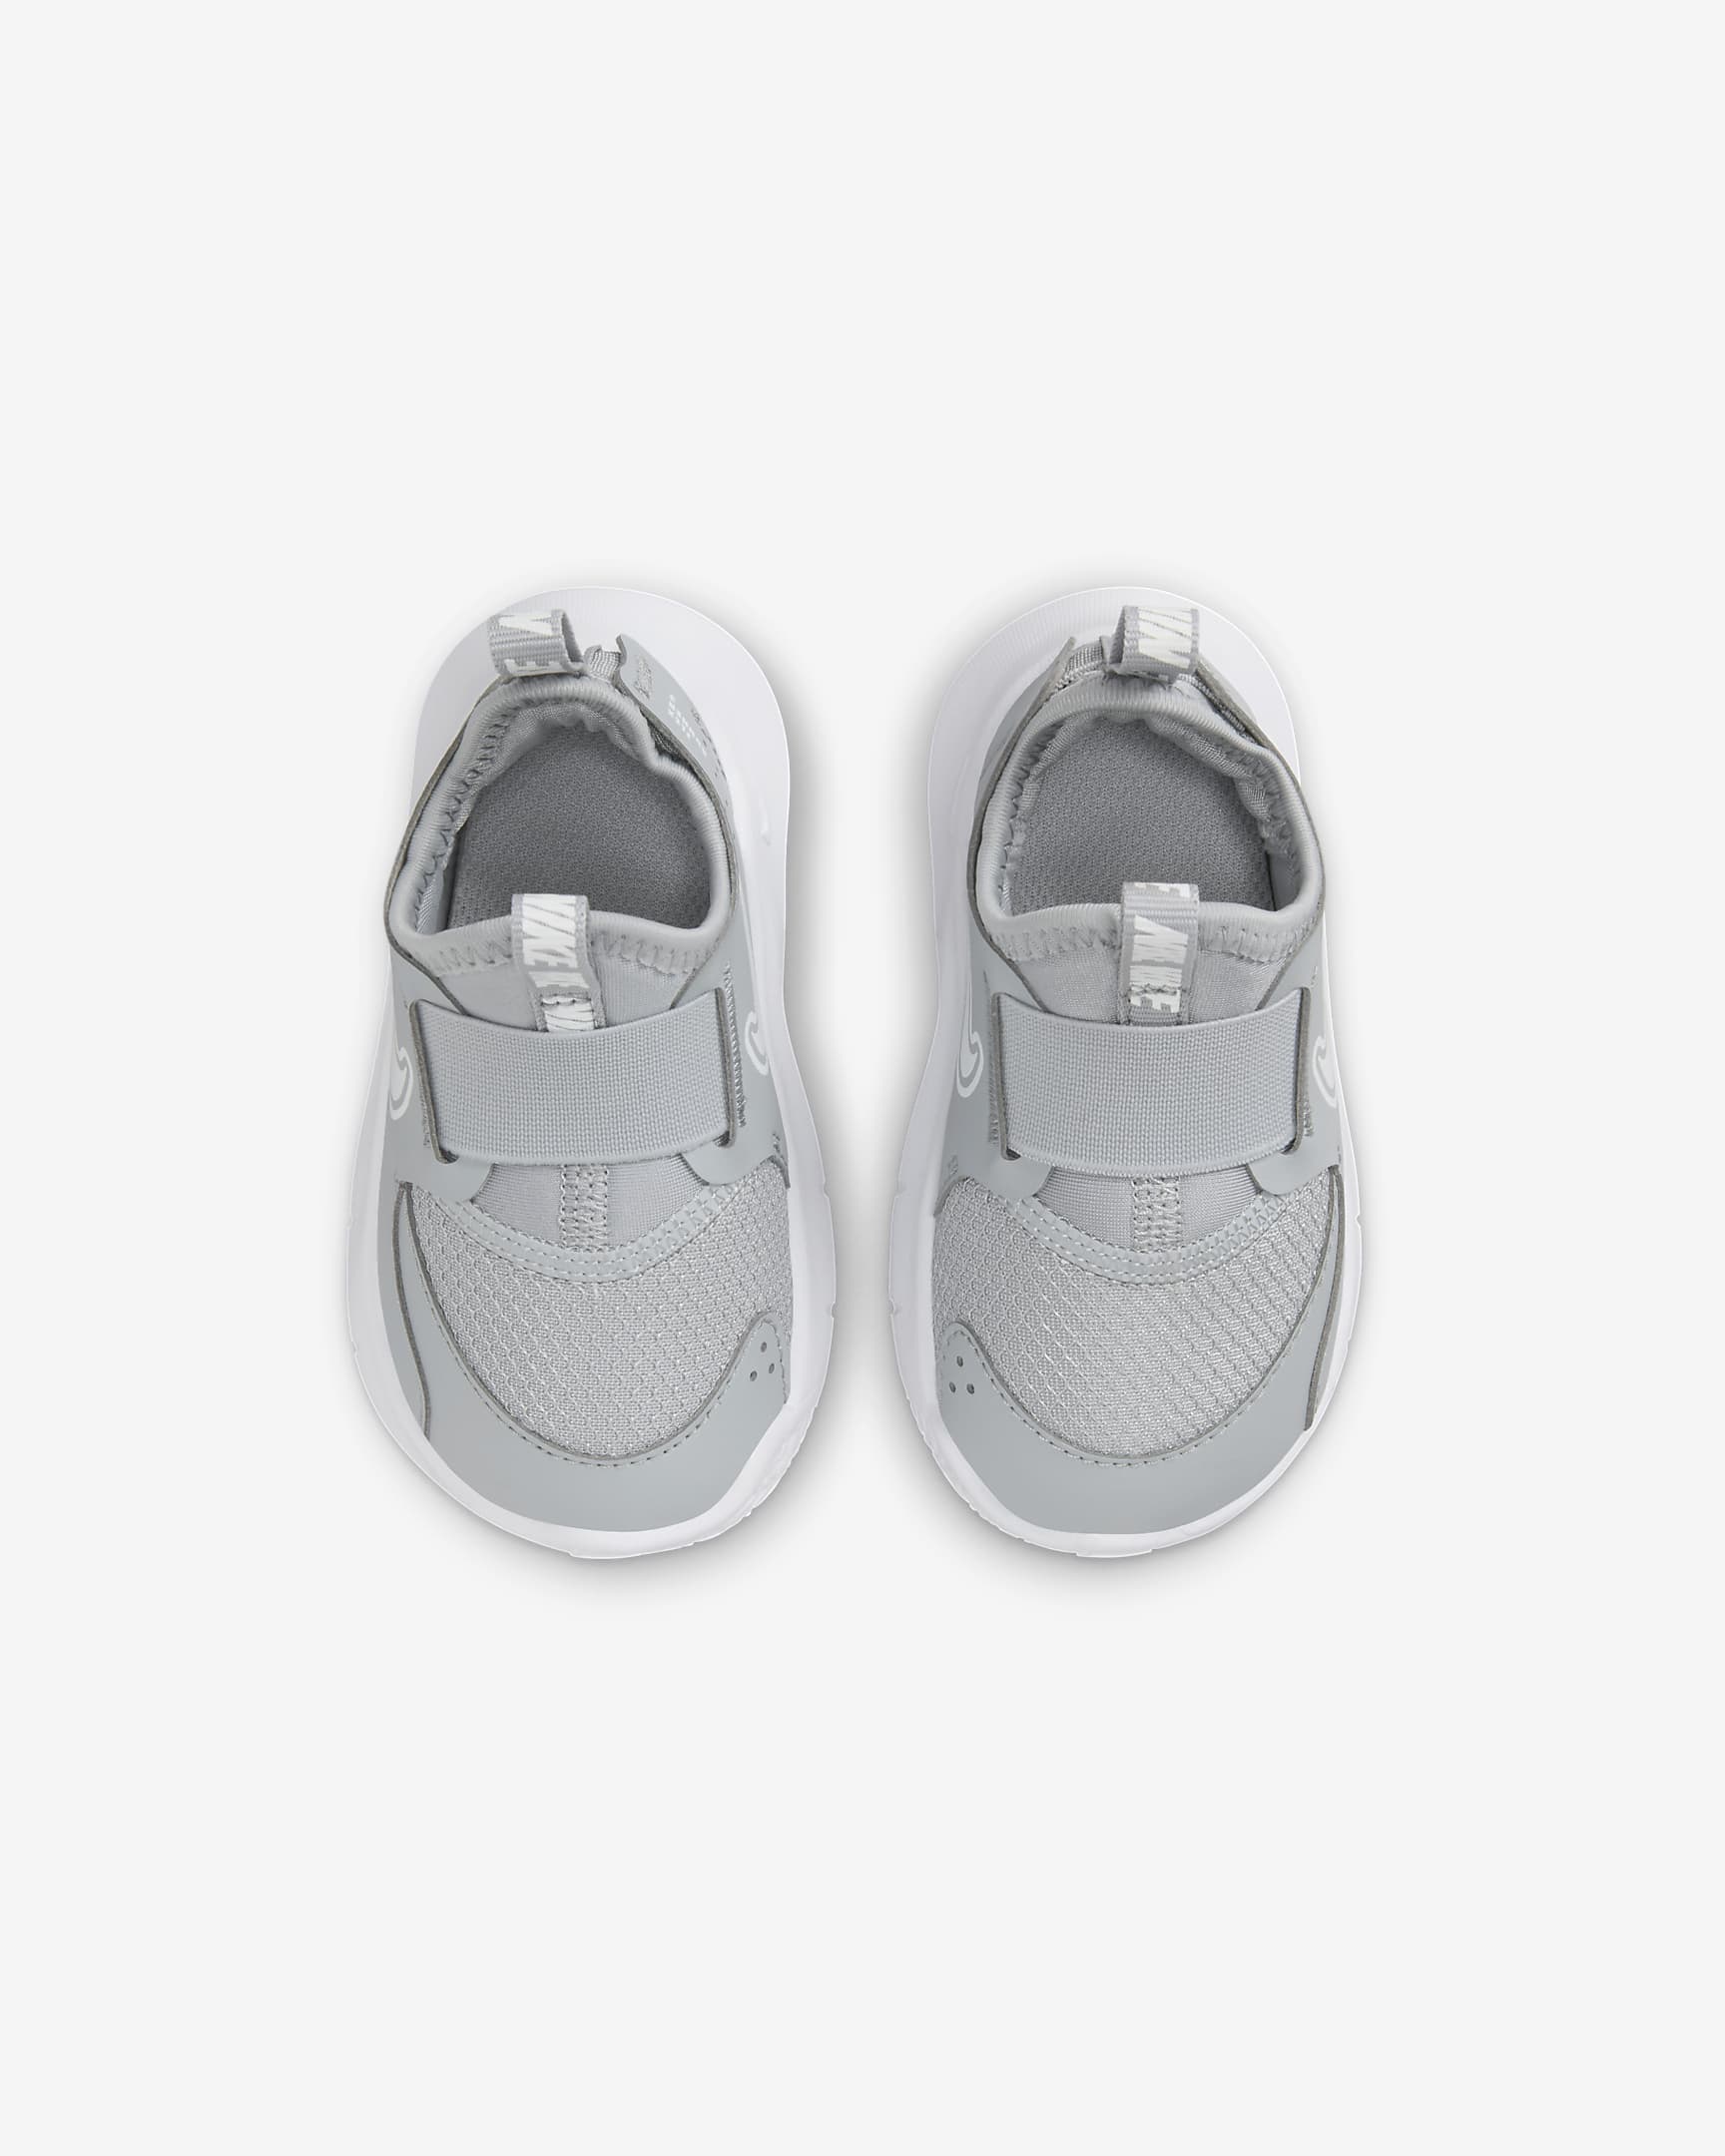 Nike Flex Runner 3 Baby/Toddler Shoes - Wolf Grey/White